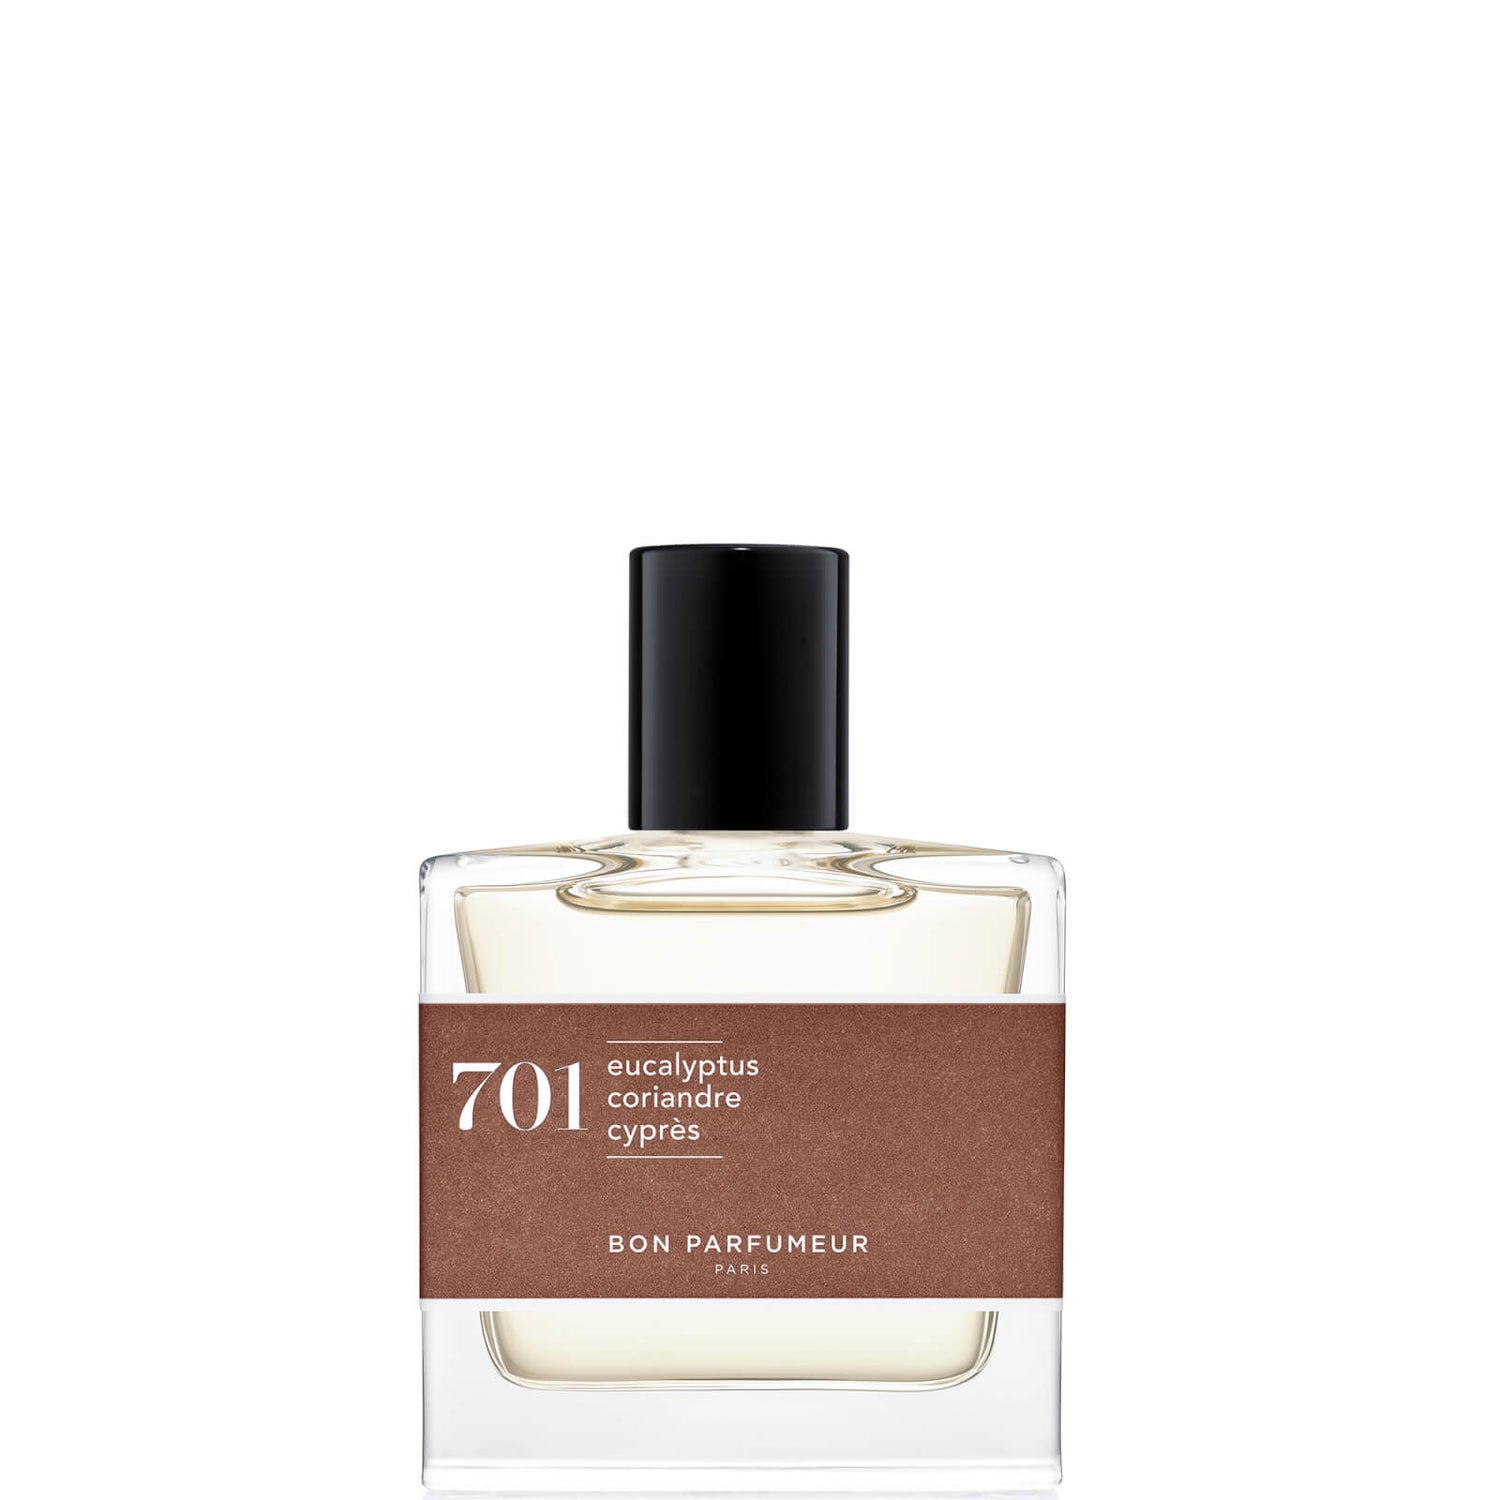 Bon Parfumeur 701 Eucalyptus Coriander Cypress Eau de Parfum -tuoksu - 30ml